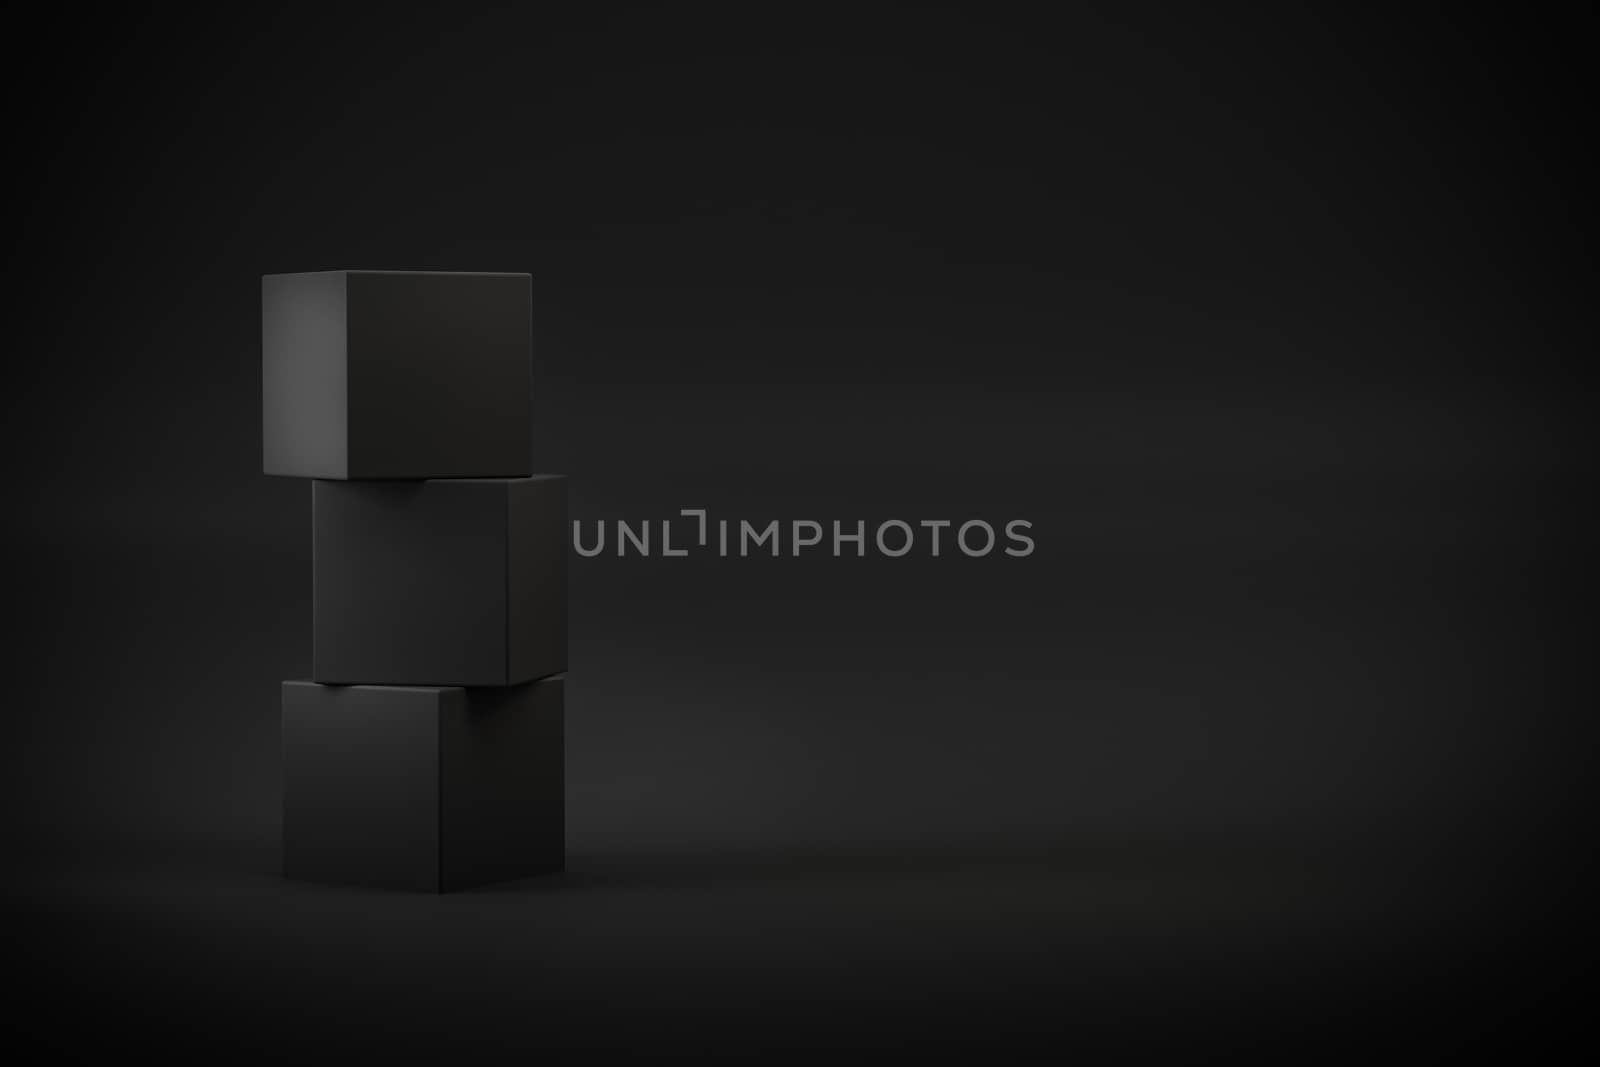 black box stack on black background 3d rendering